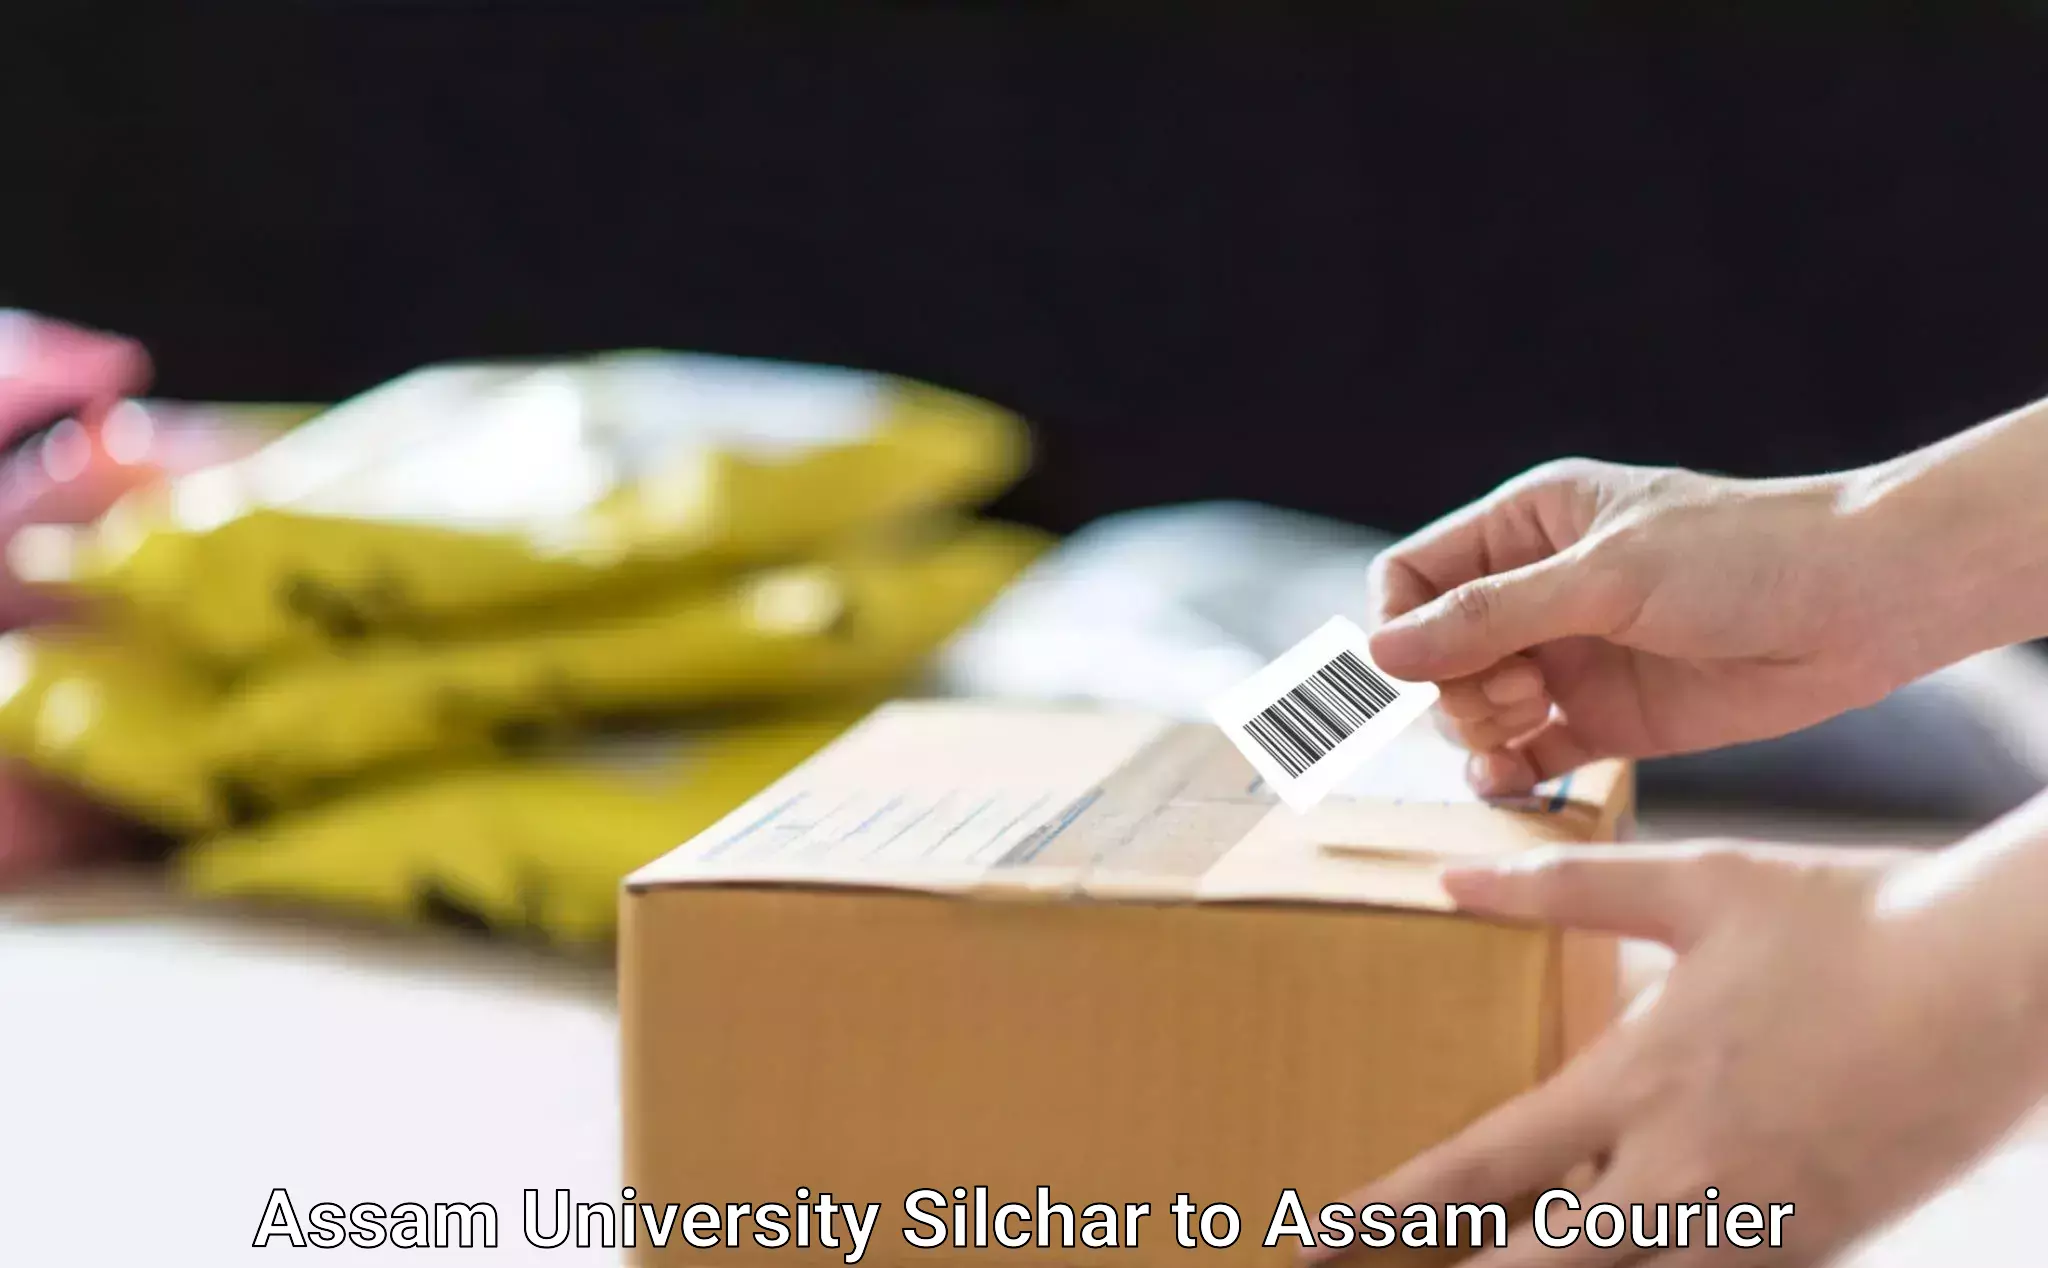 Efficient freight service Assam University Silchar to Hojai Lanka